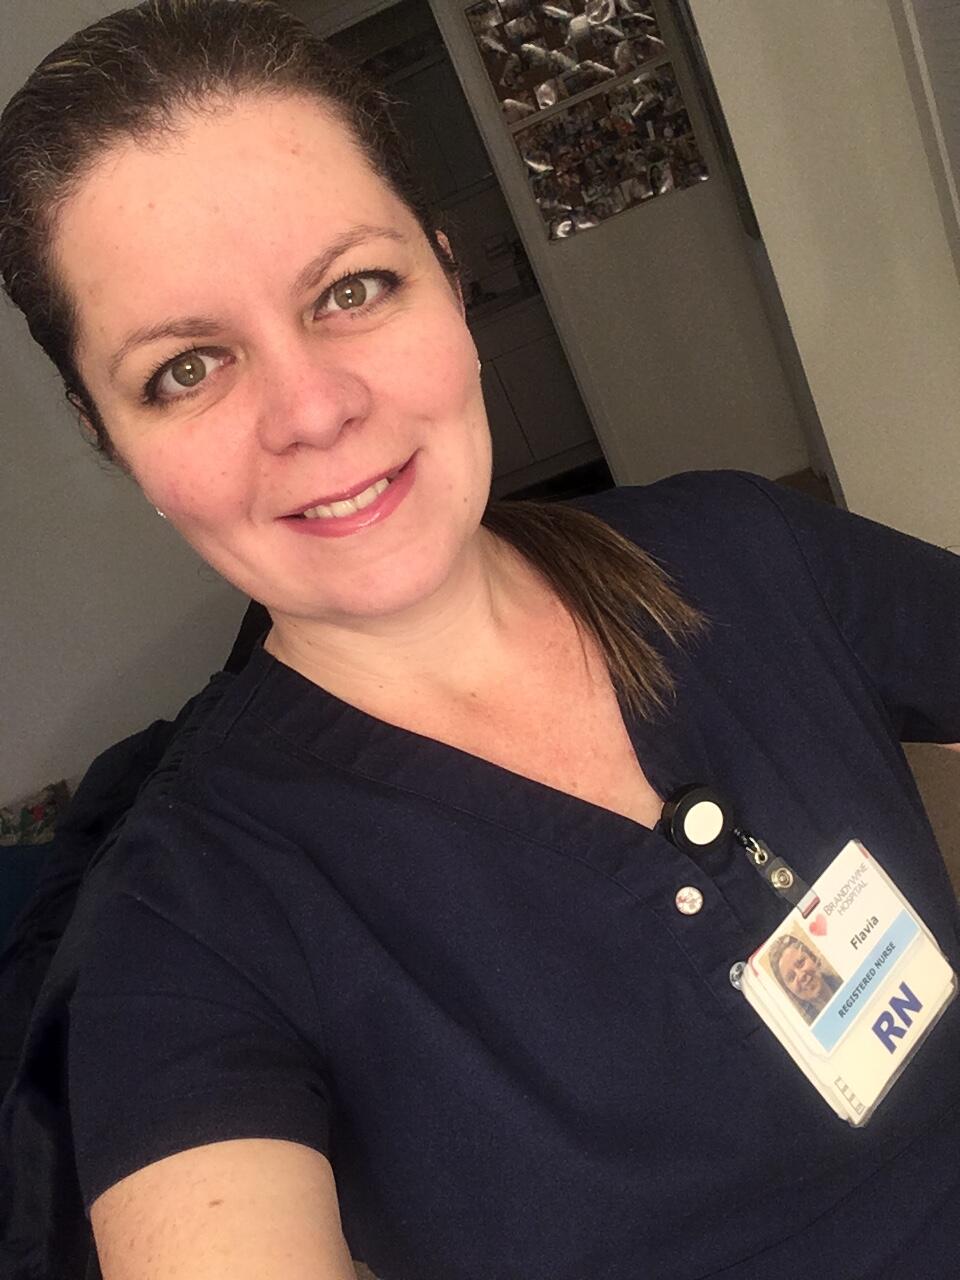 Selfie of woman in nurse's scrubs